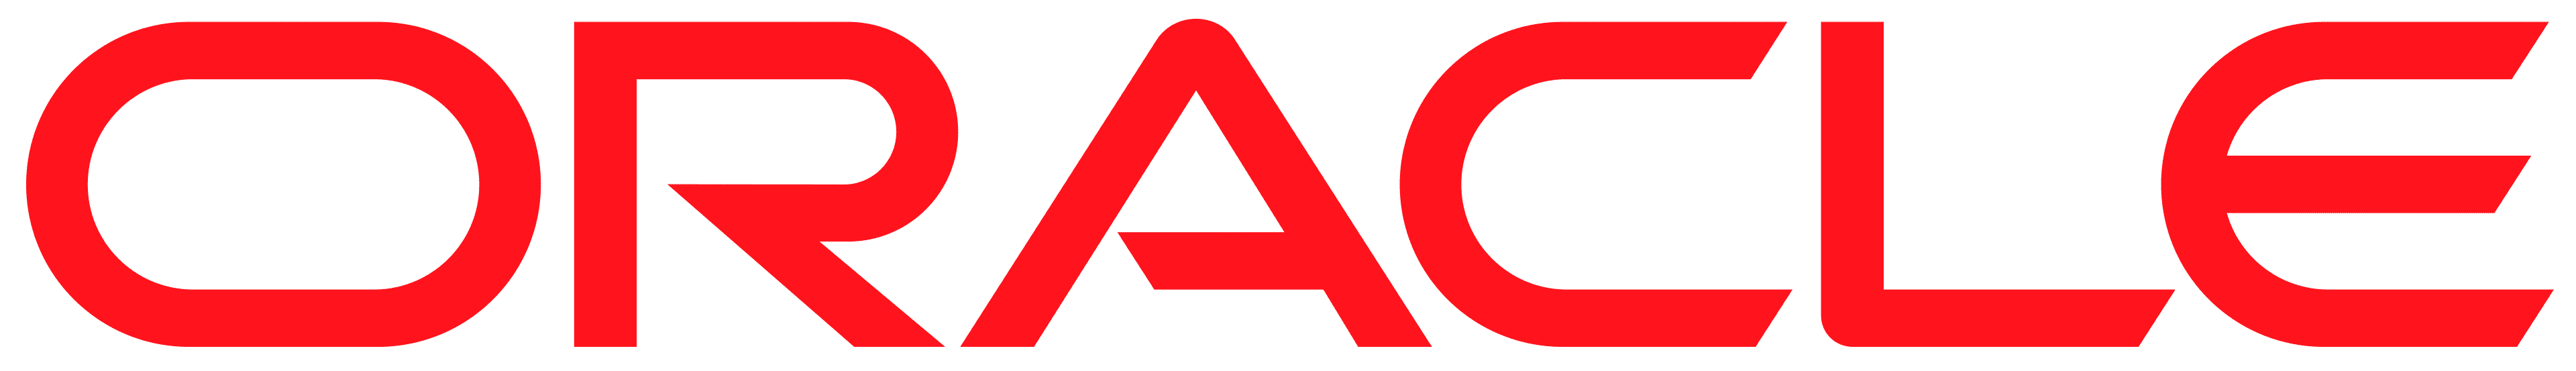 Oracle-logo-1